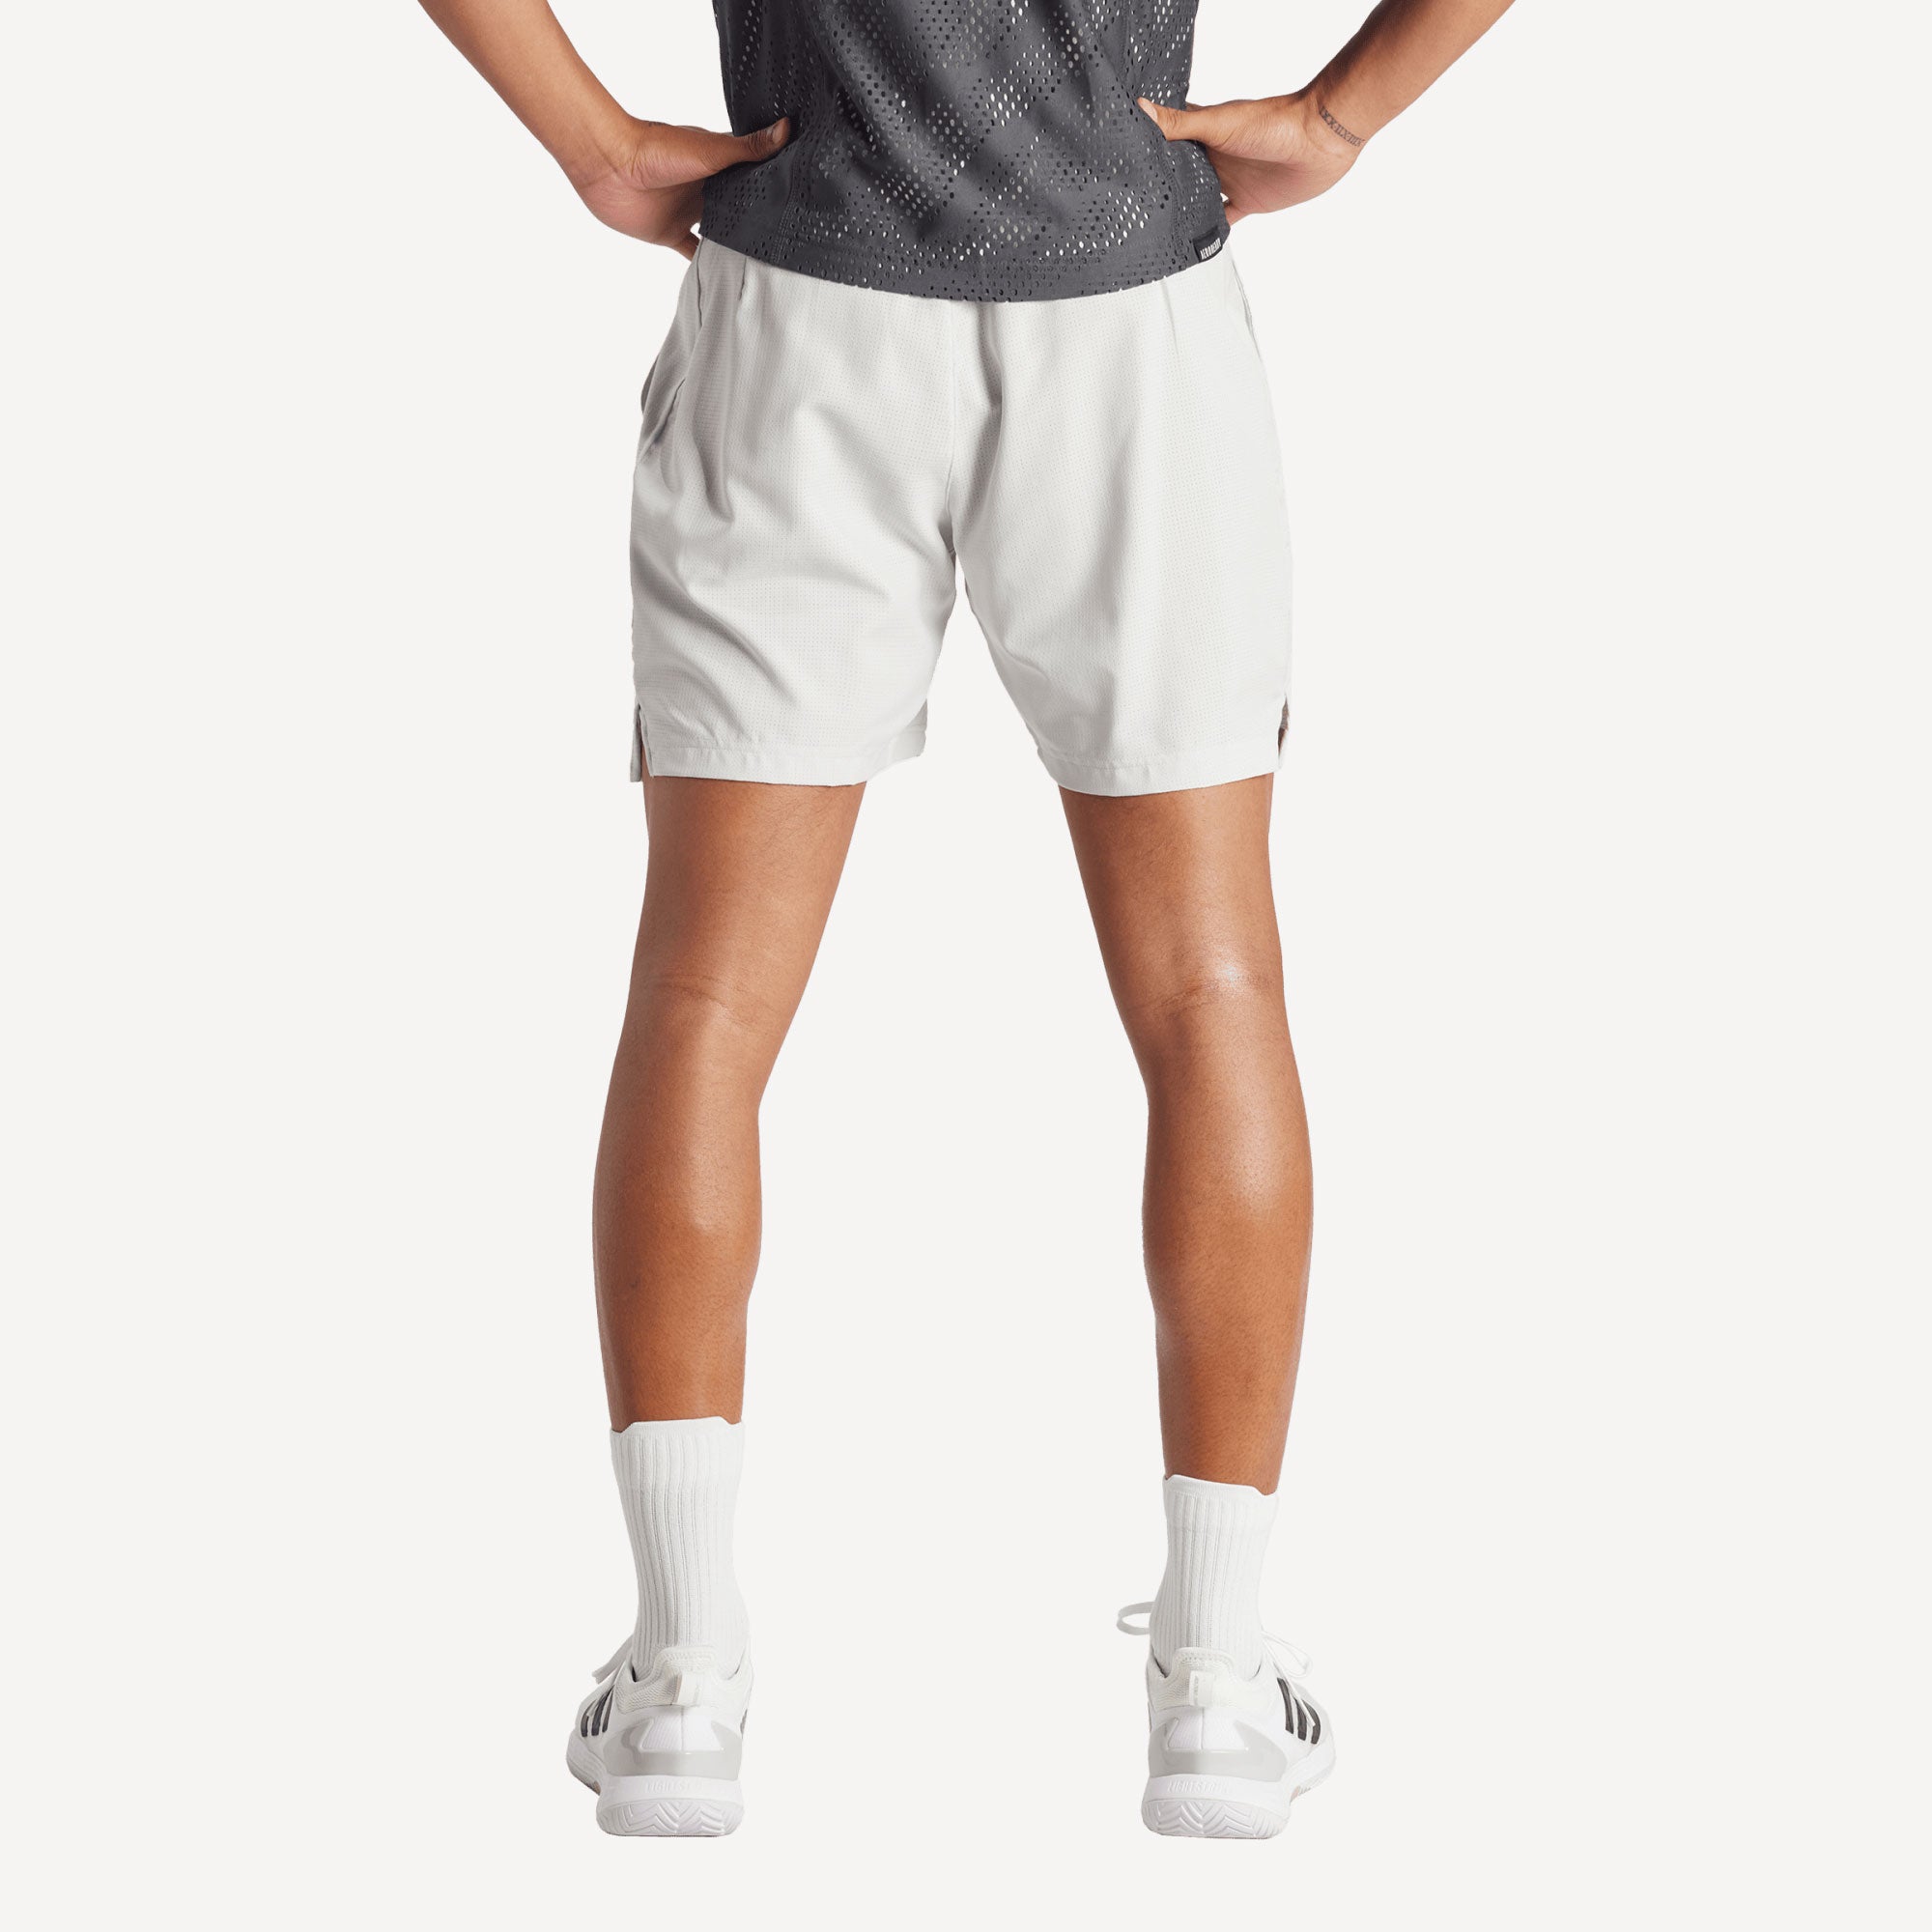 adidas Pro Melbourne Men's Tennis Shorts and Inner Shorts Set - Grey (2)